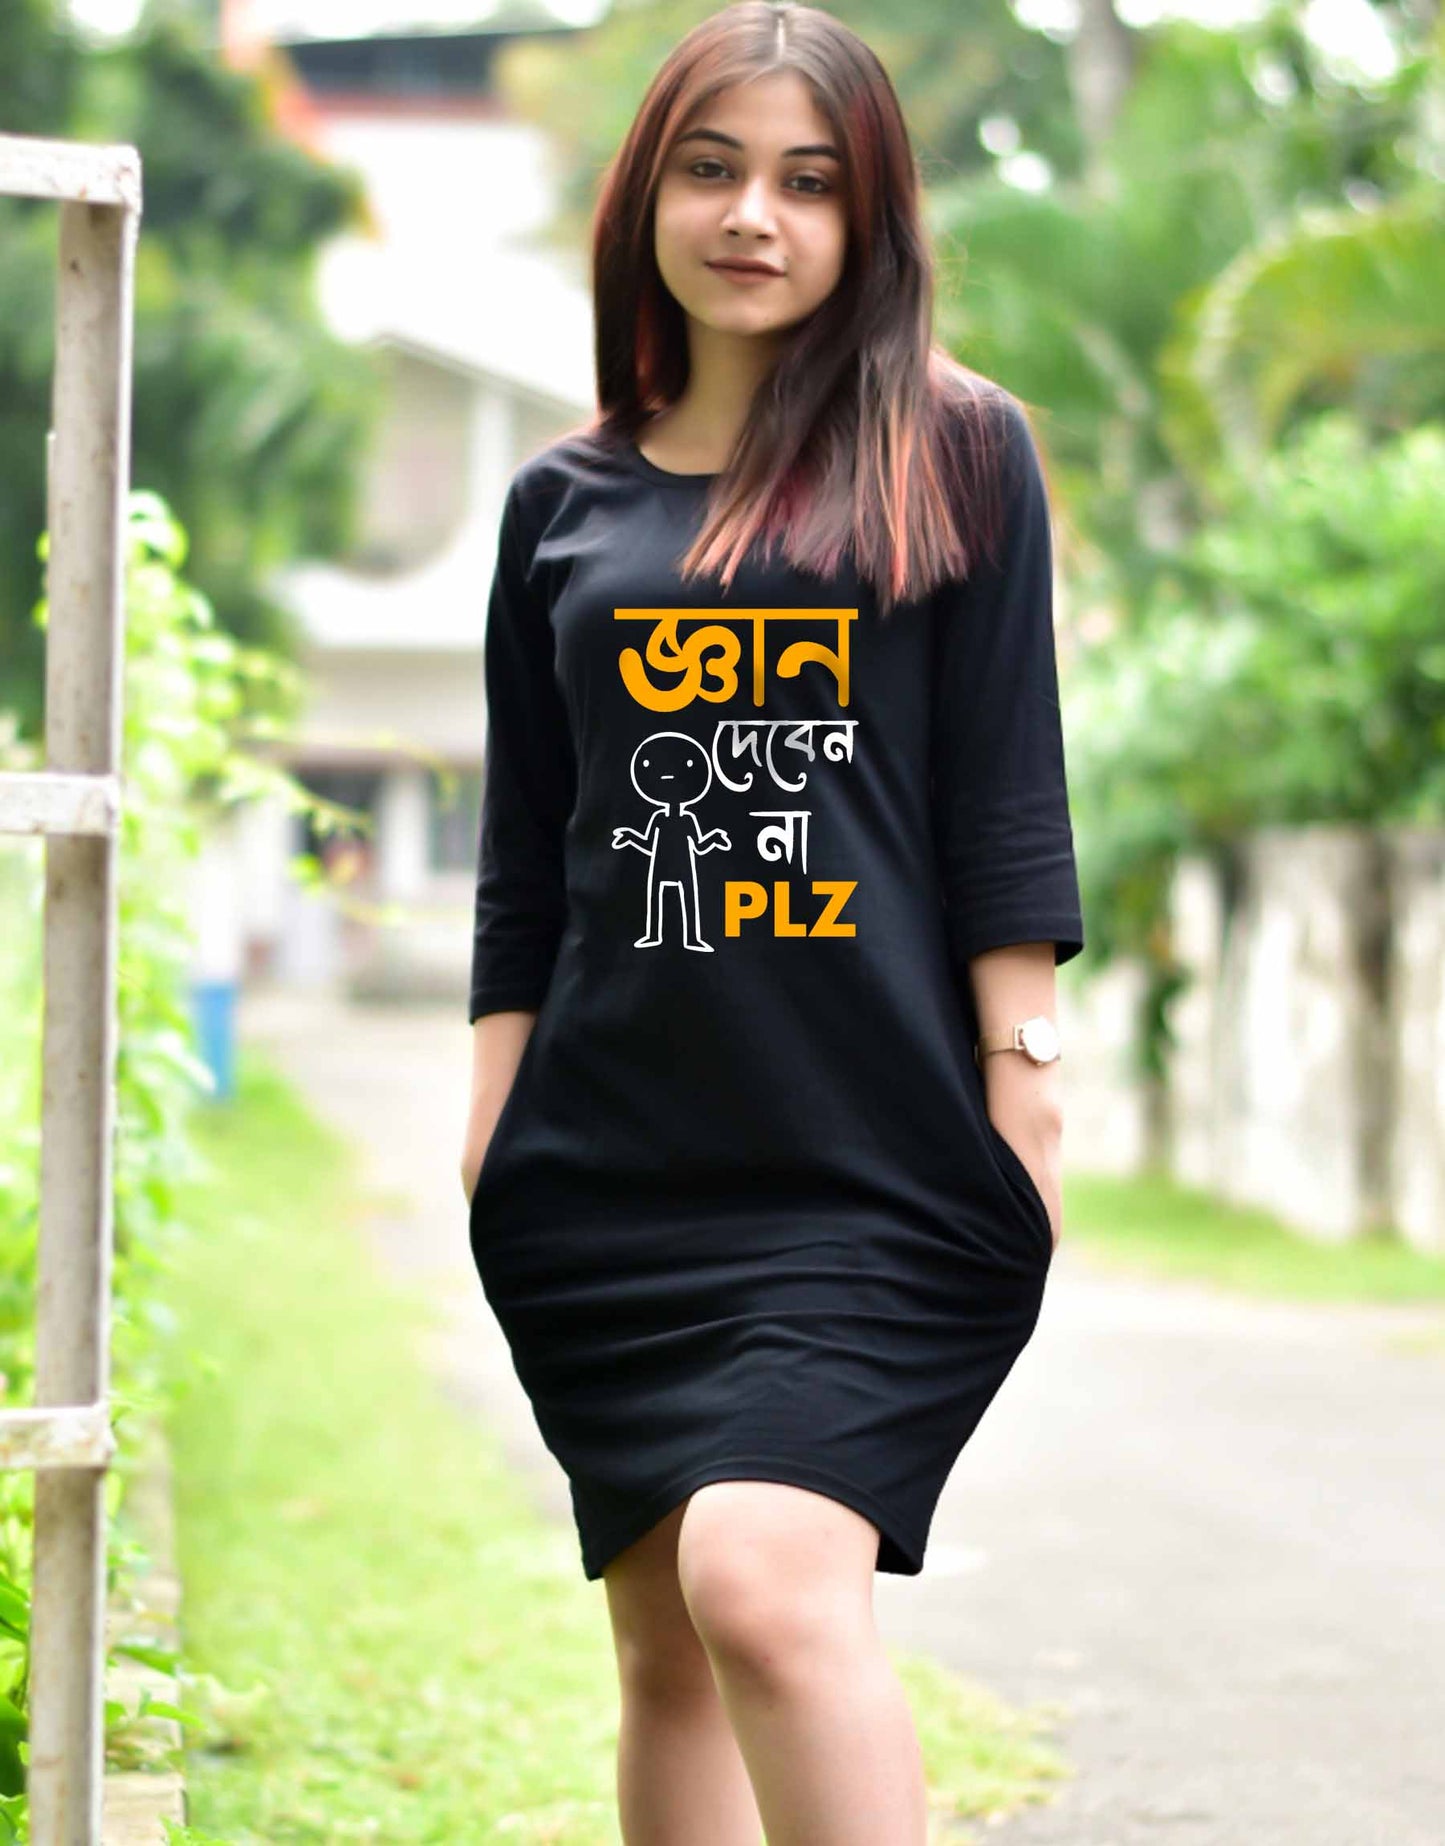 T-Shirt Dress For Women - Gyan Deben na plz